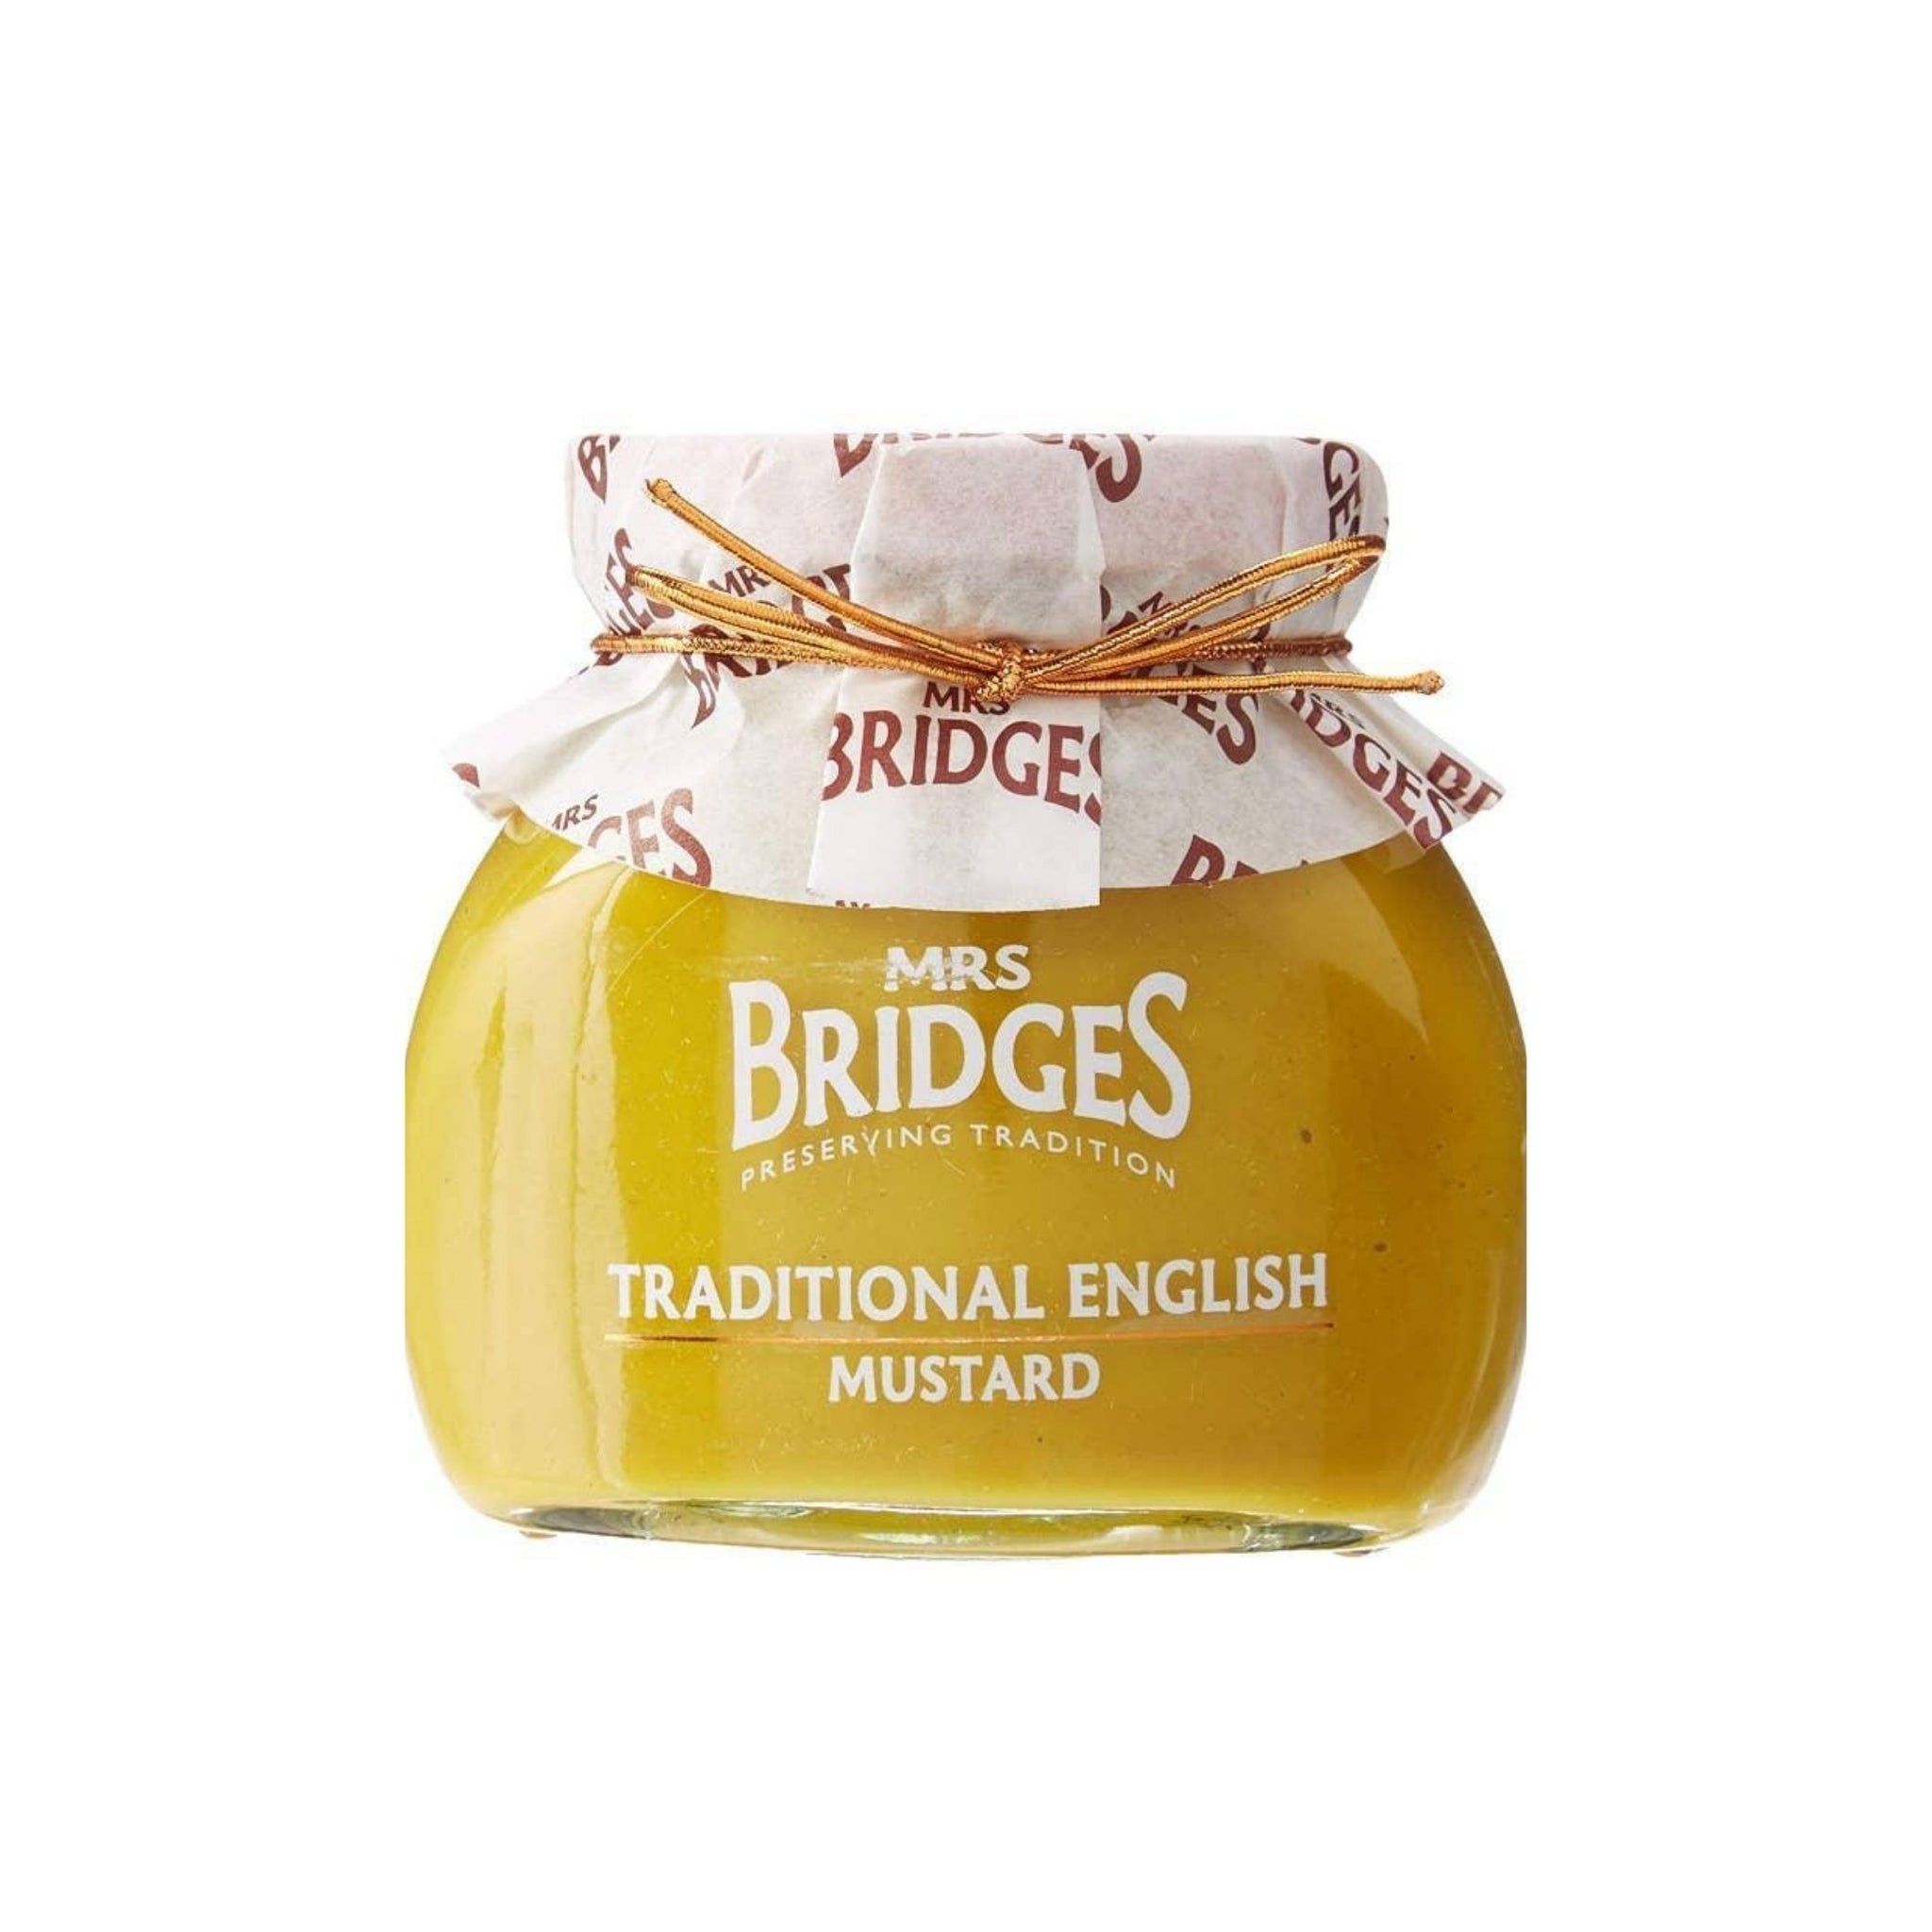 Mrs Bridges Traditional English Mustard 7oz